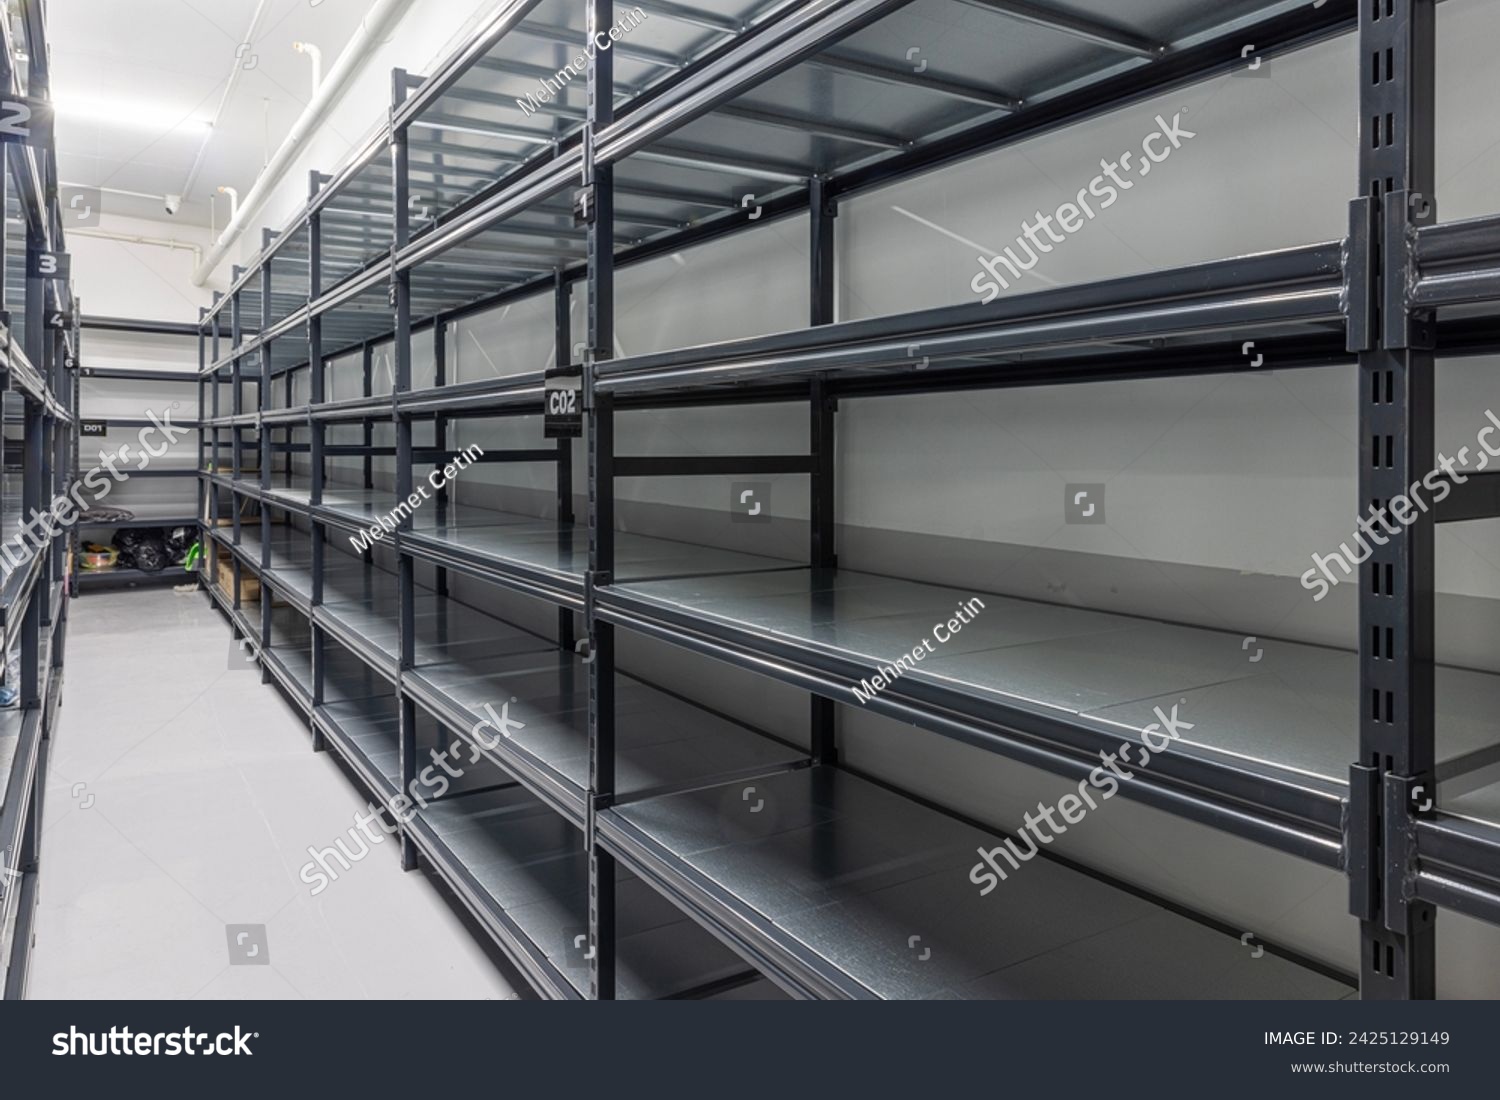 Warehouse racks storage metal pallet racking system in warehouse. Modern interior of new empty warehouse. The shelves are pallet racks. Metal structure. Storage equipment. #2425129149